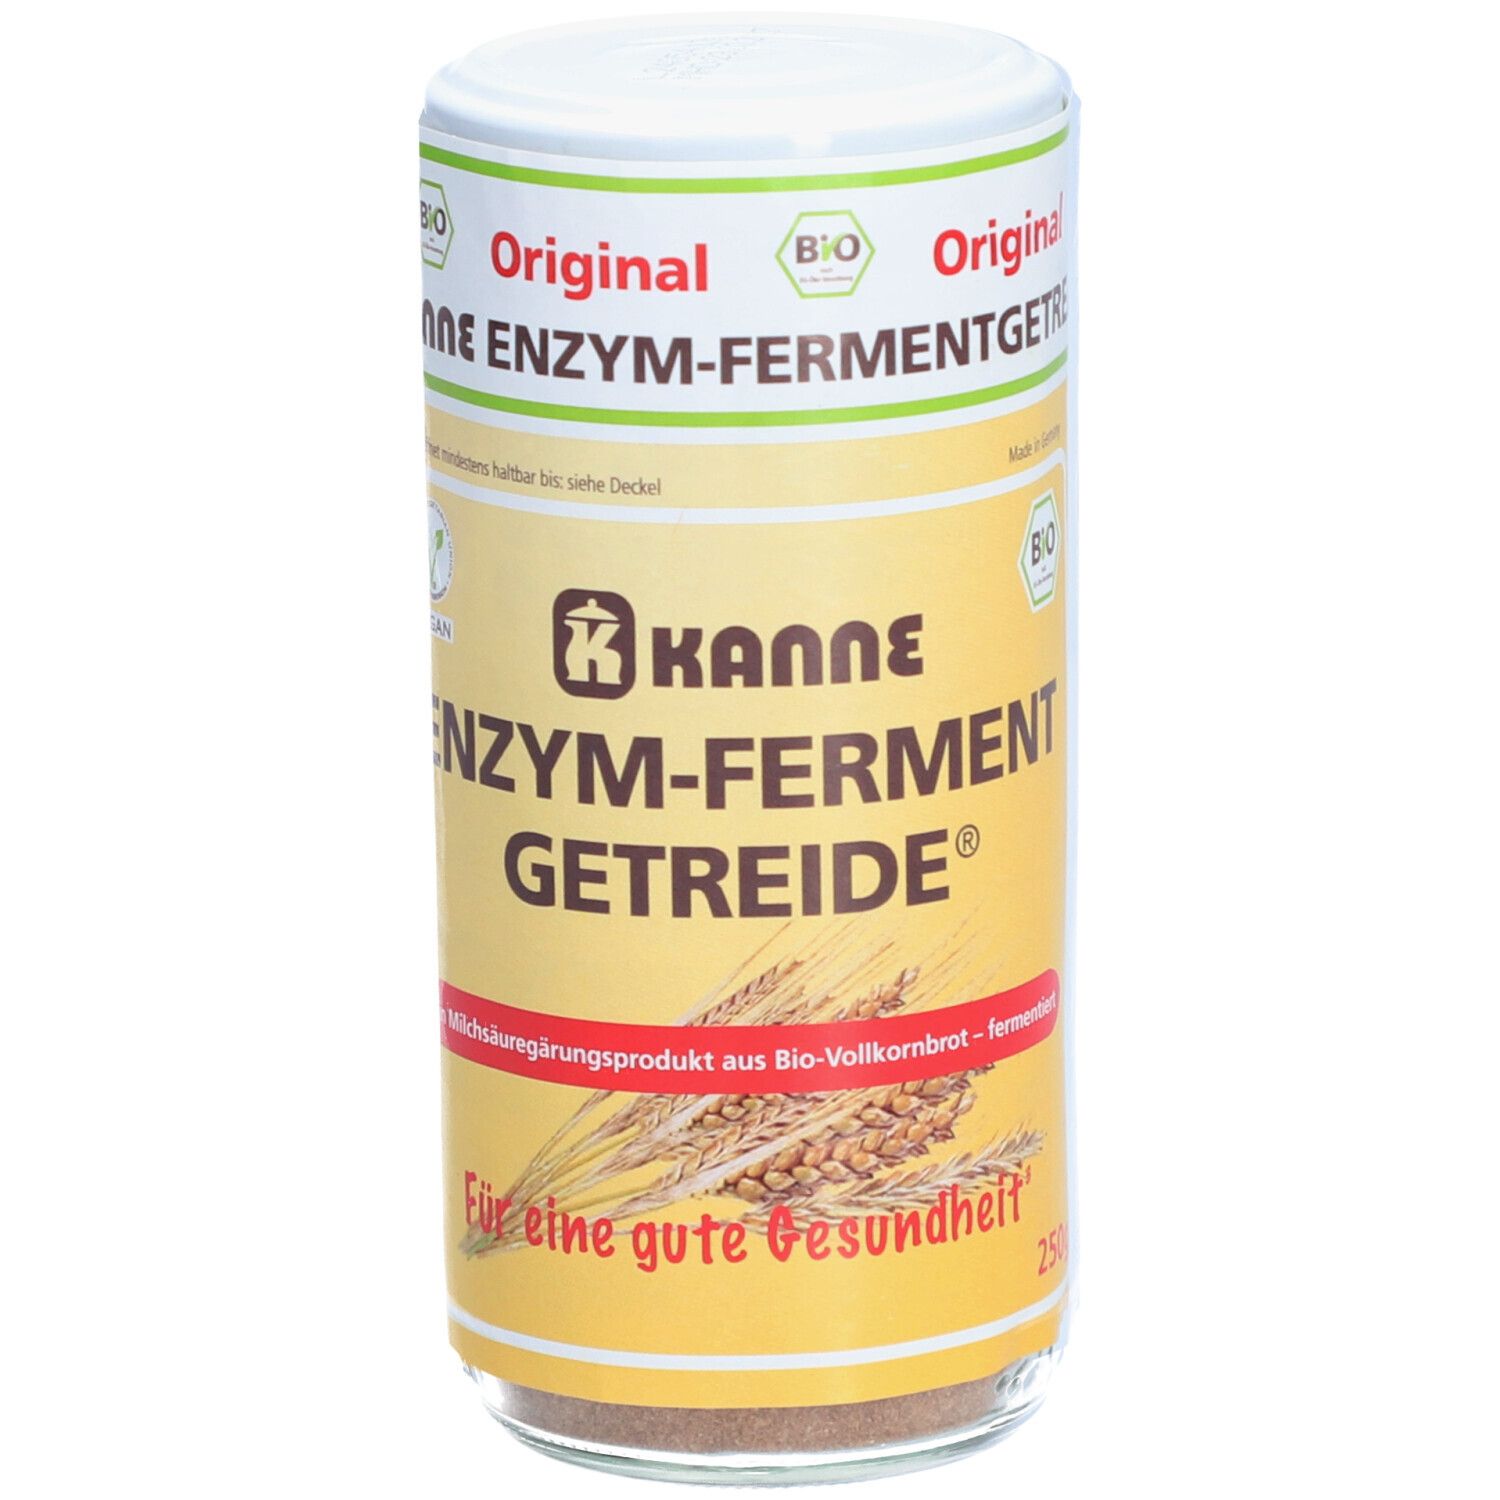 Image of Kanne Bio Enzym-Fermentgetreide®